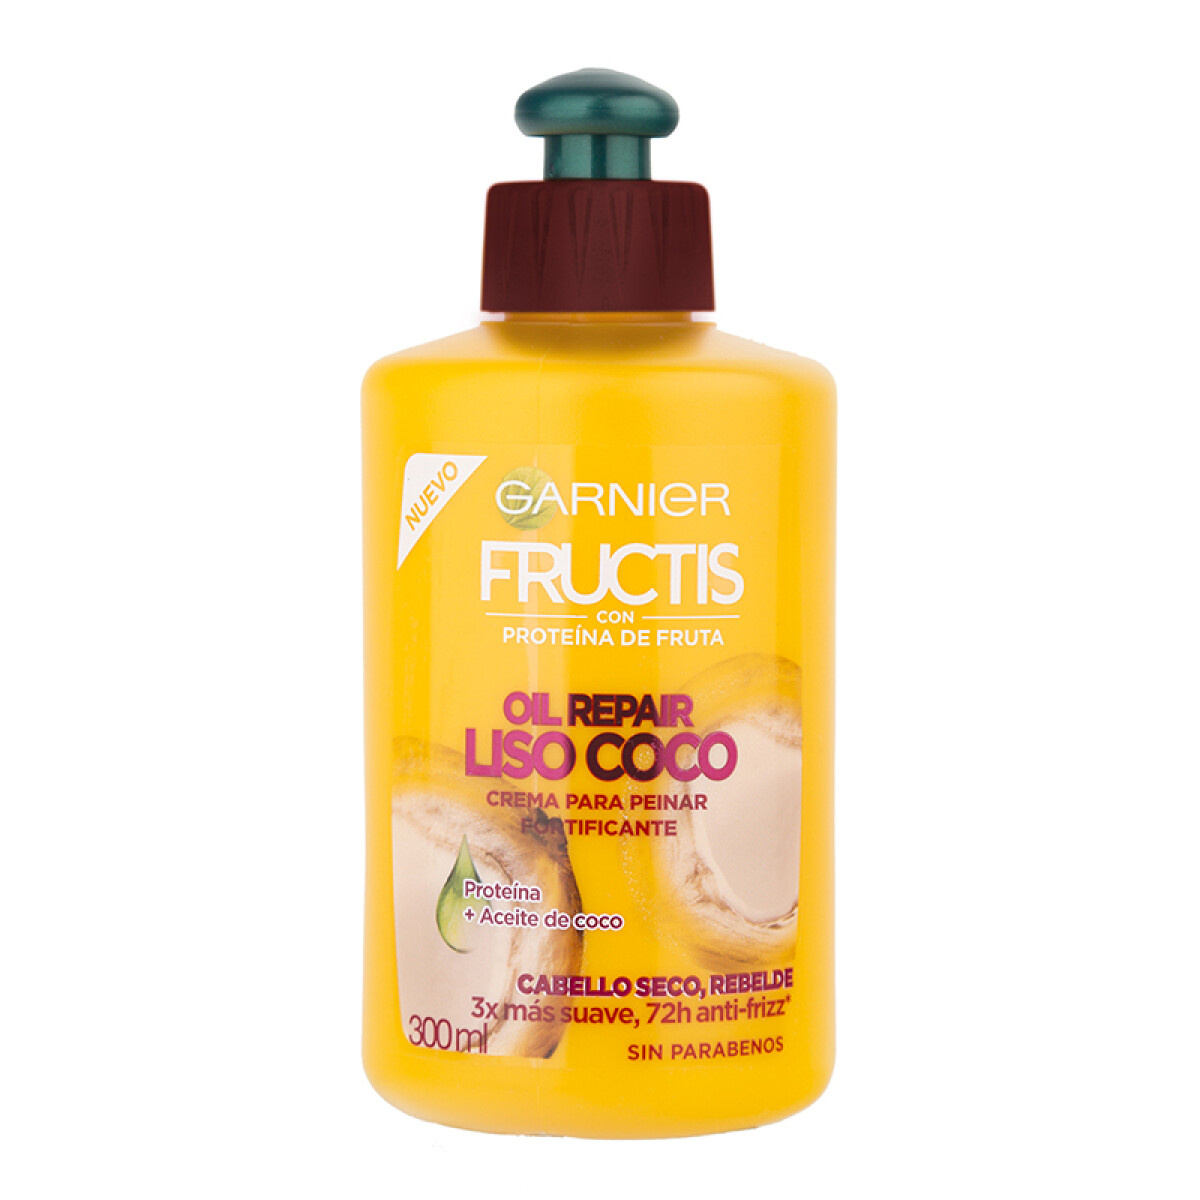 Crema para peinar Garnier fructis - Oil repair liso coco 